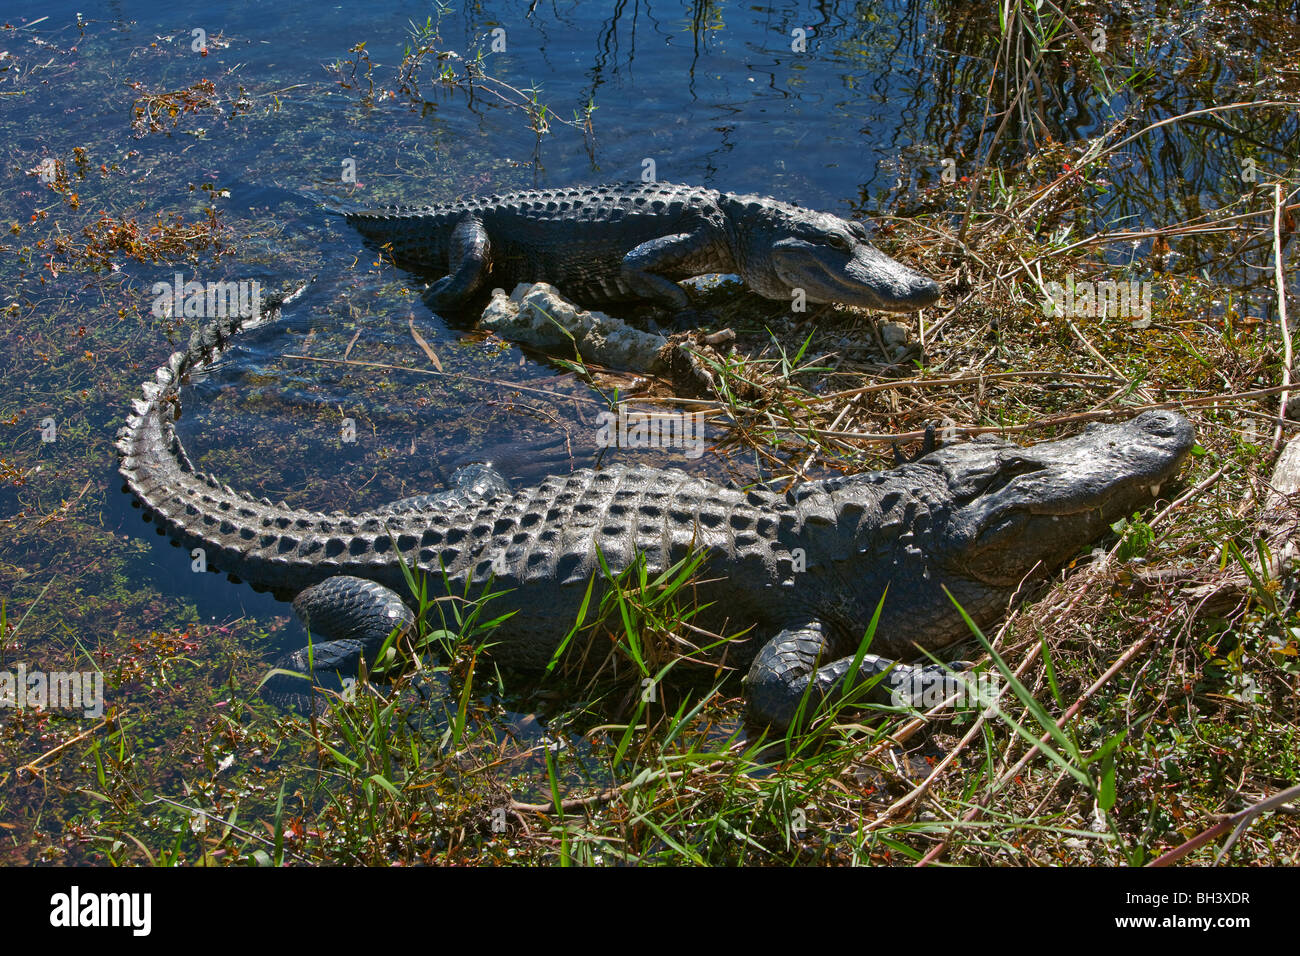 American Alligator, Alligator mississippiensis Stock Photo